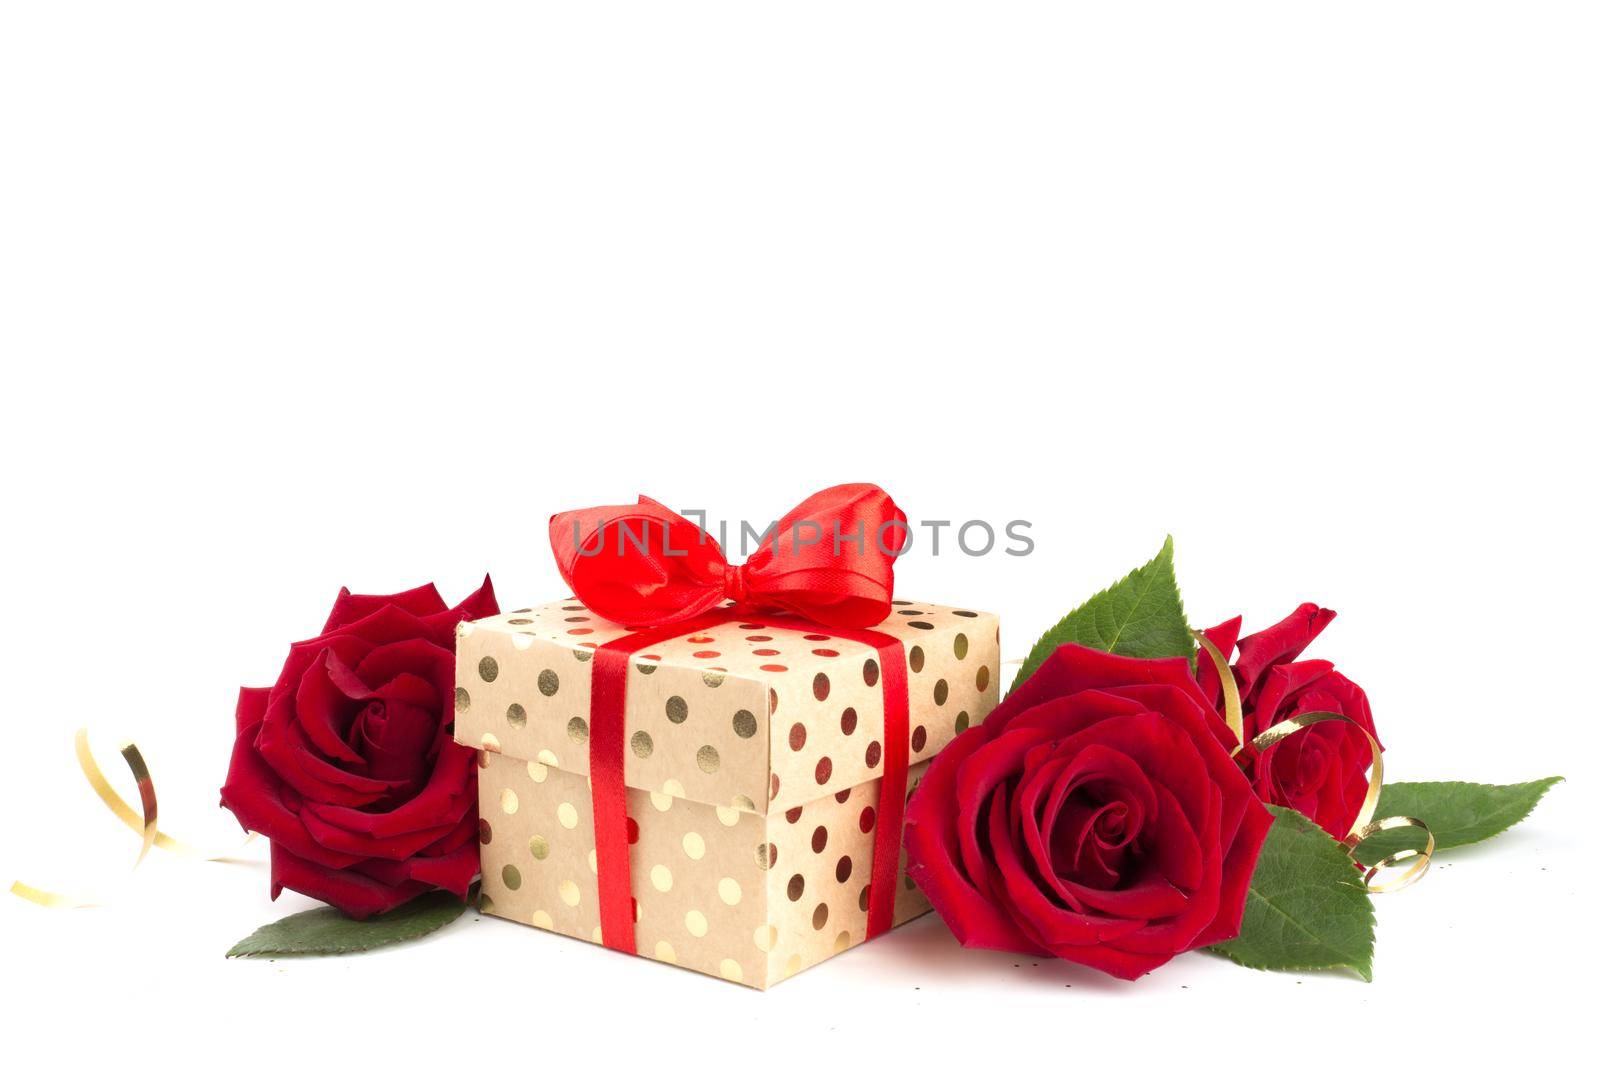 Valentine day gift and flowers by destillat